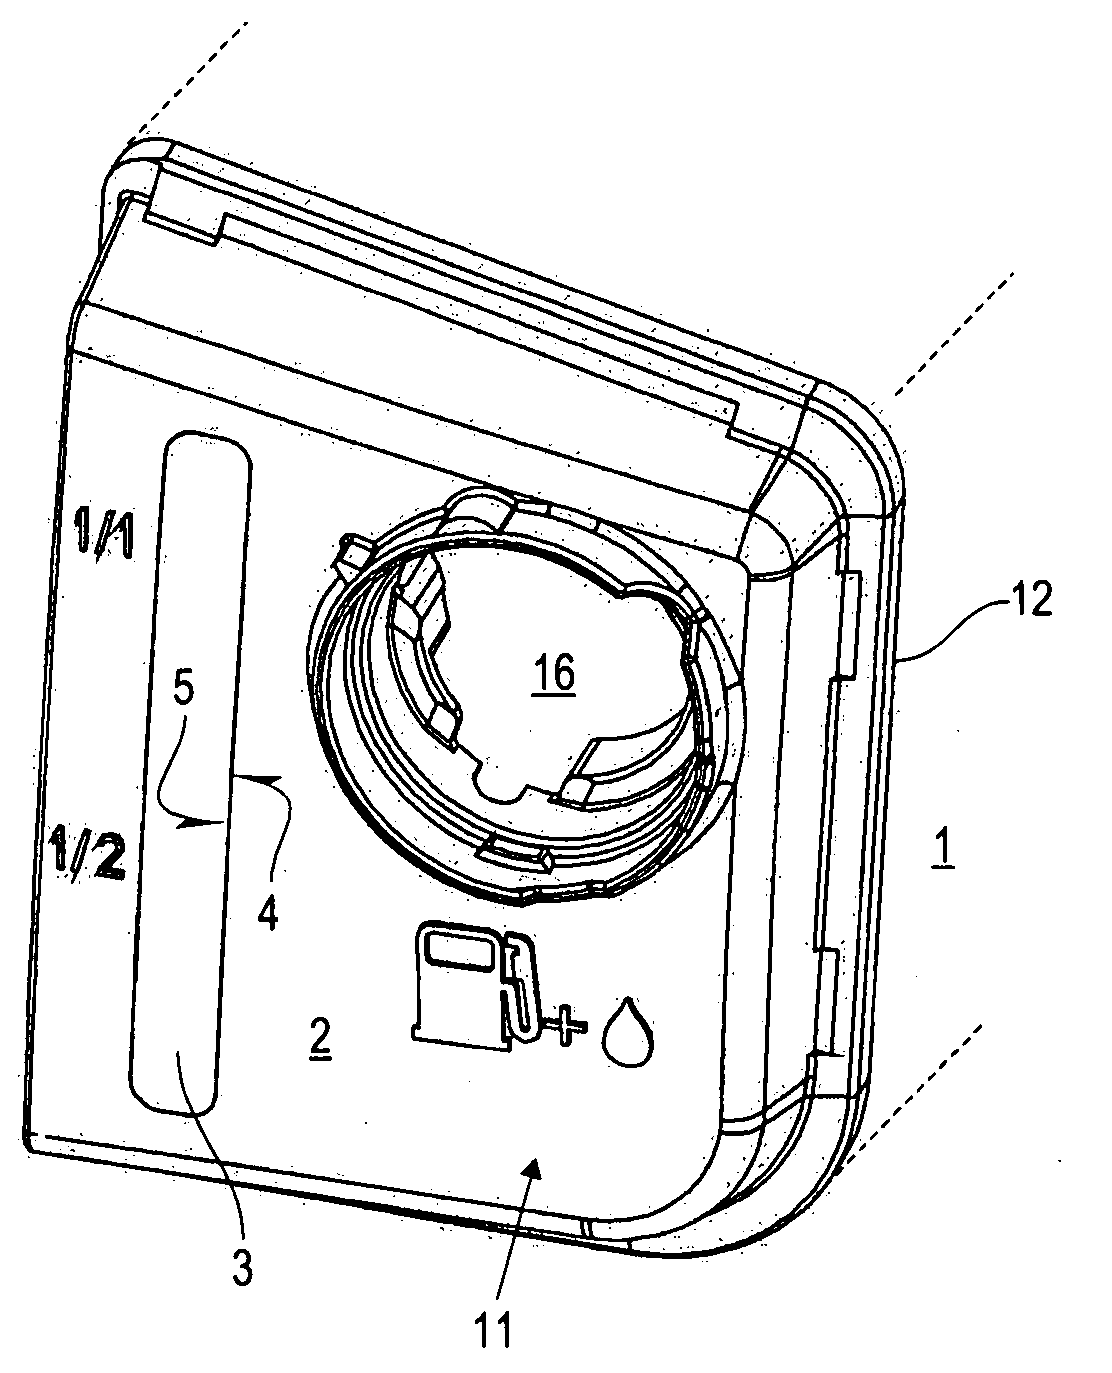 Vessel of a portable handheld work apparatus